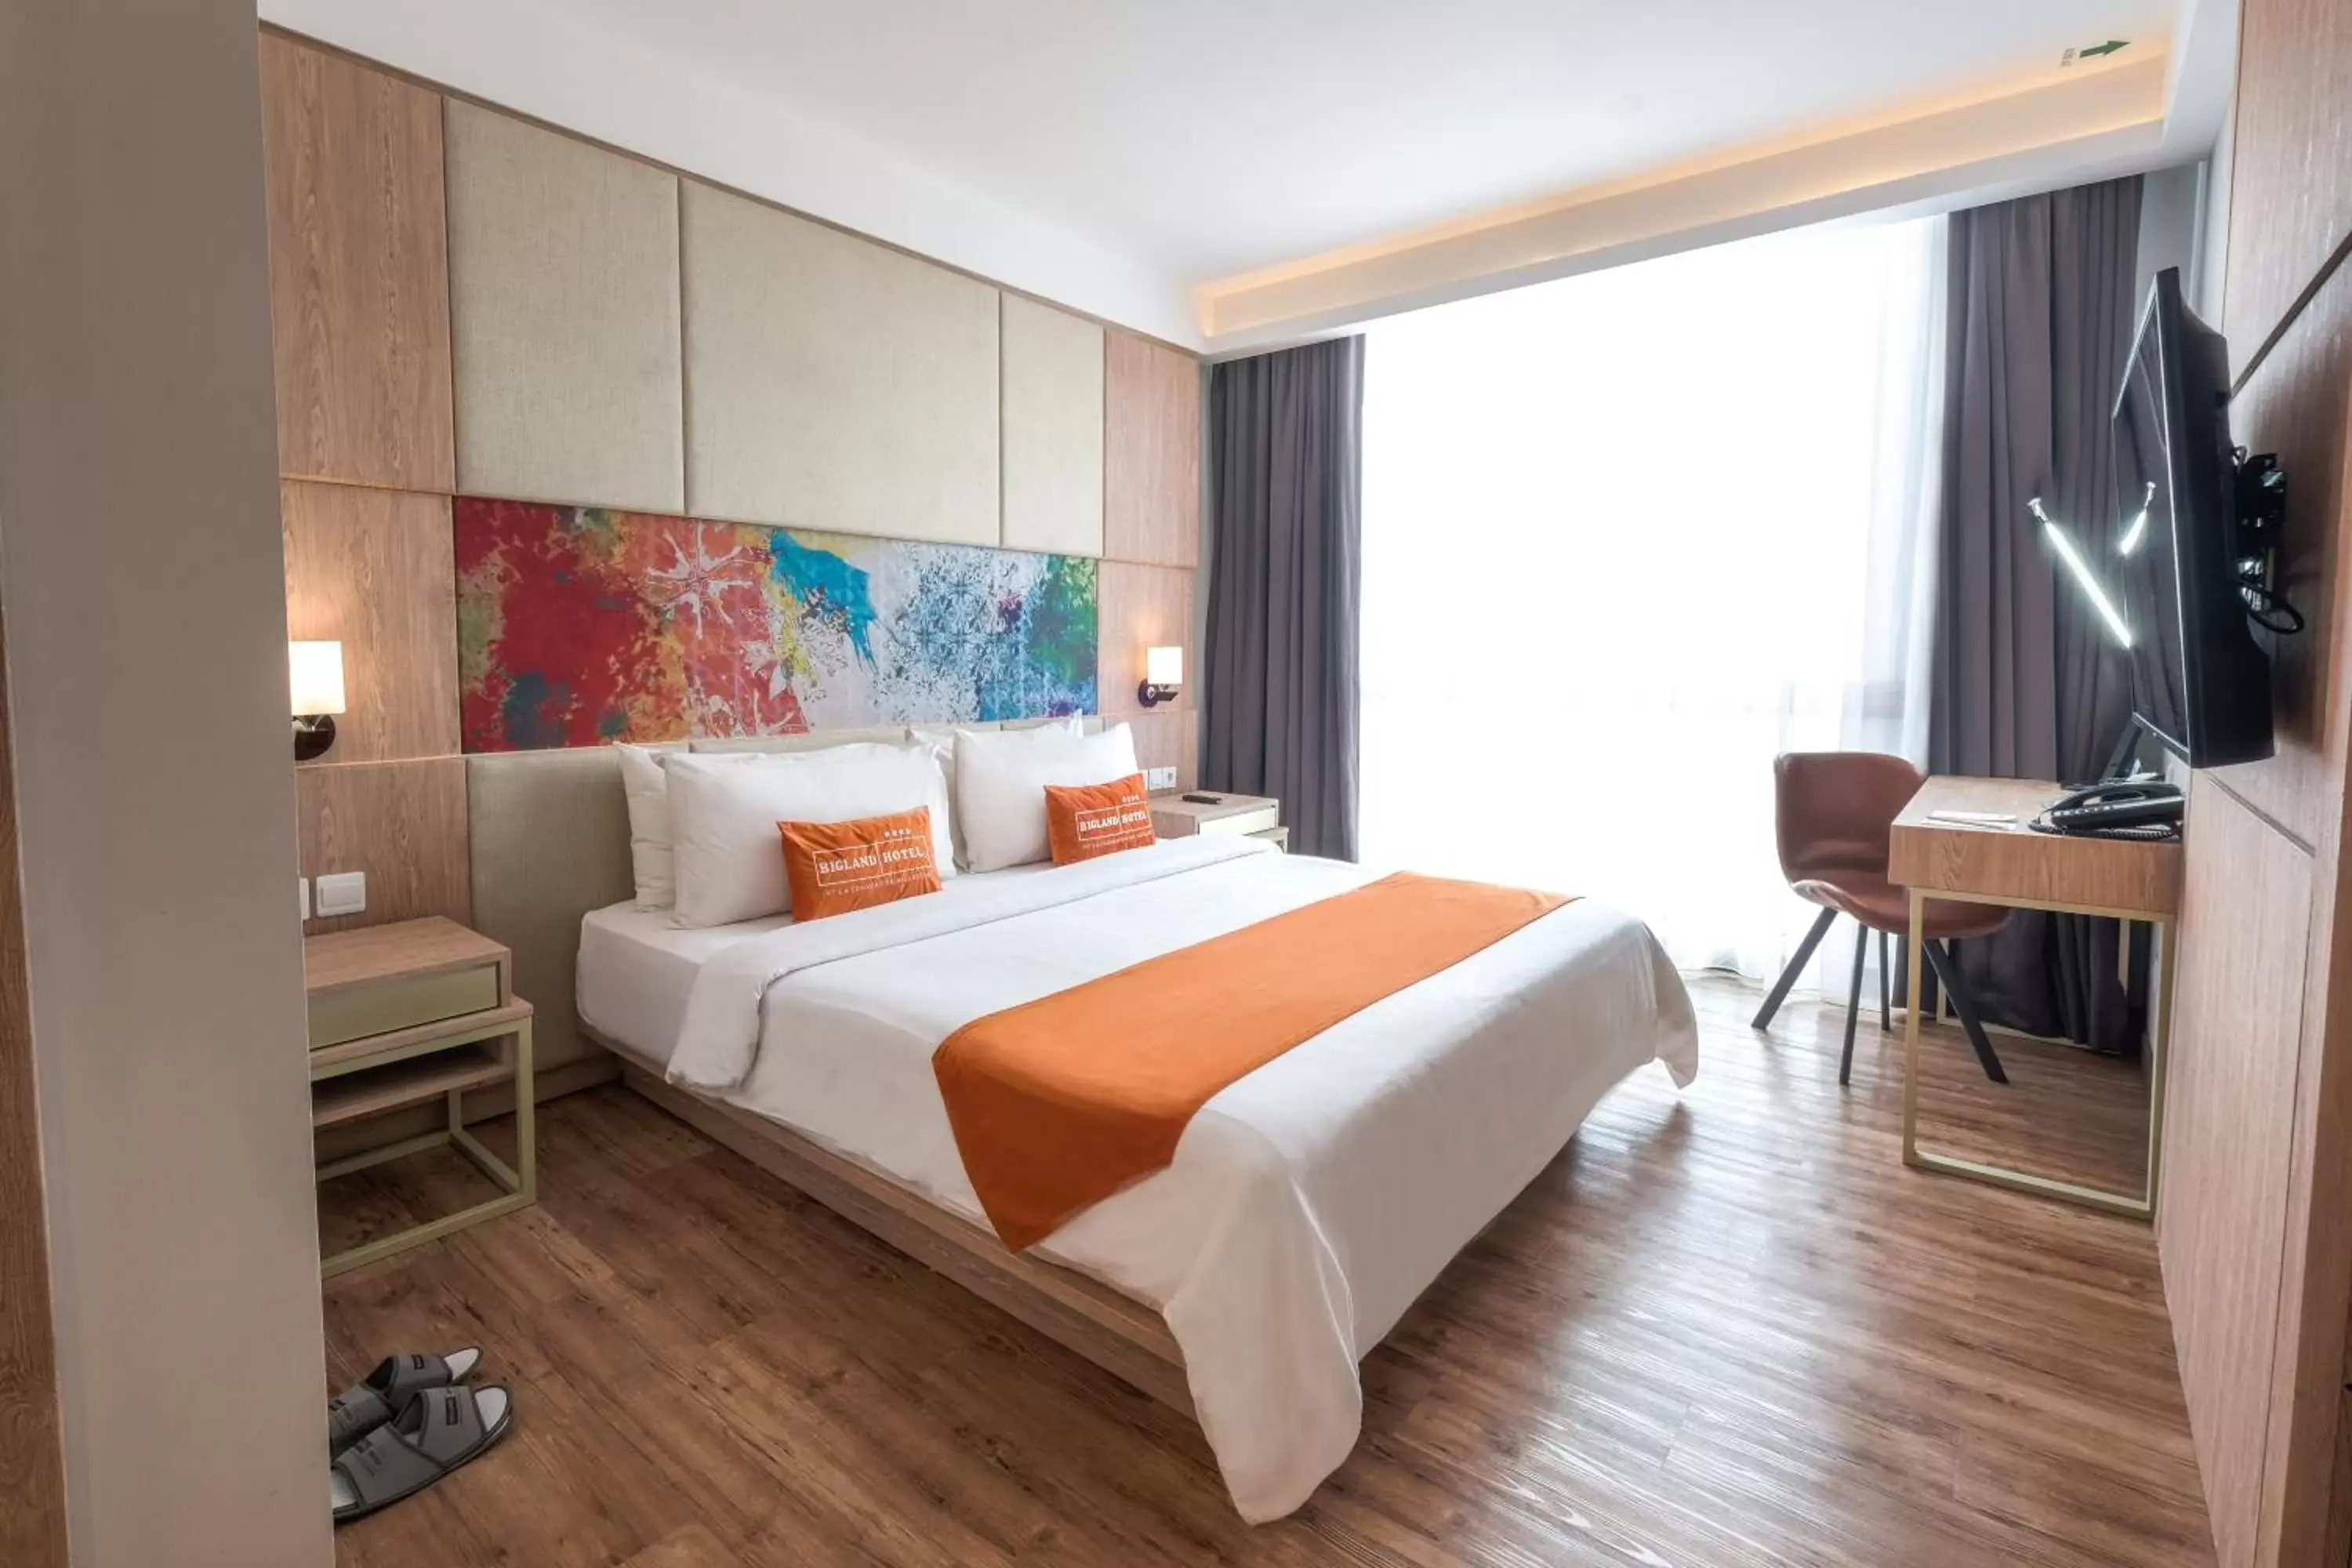 Bedroom, Bed in Bigland Hotel Bogor